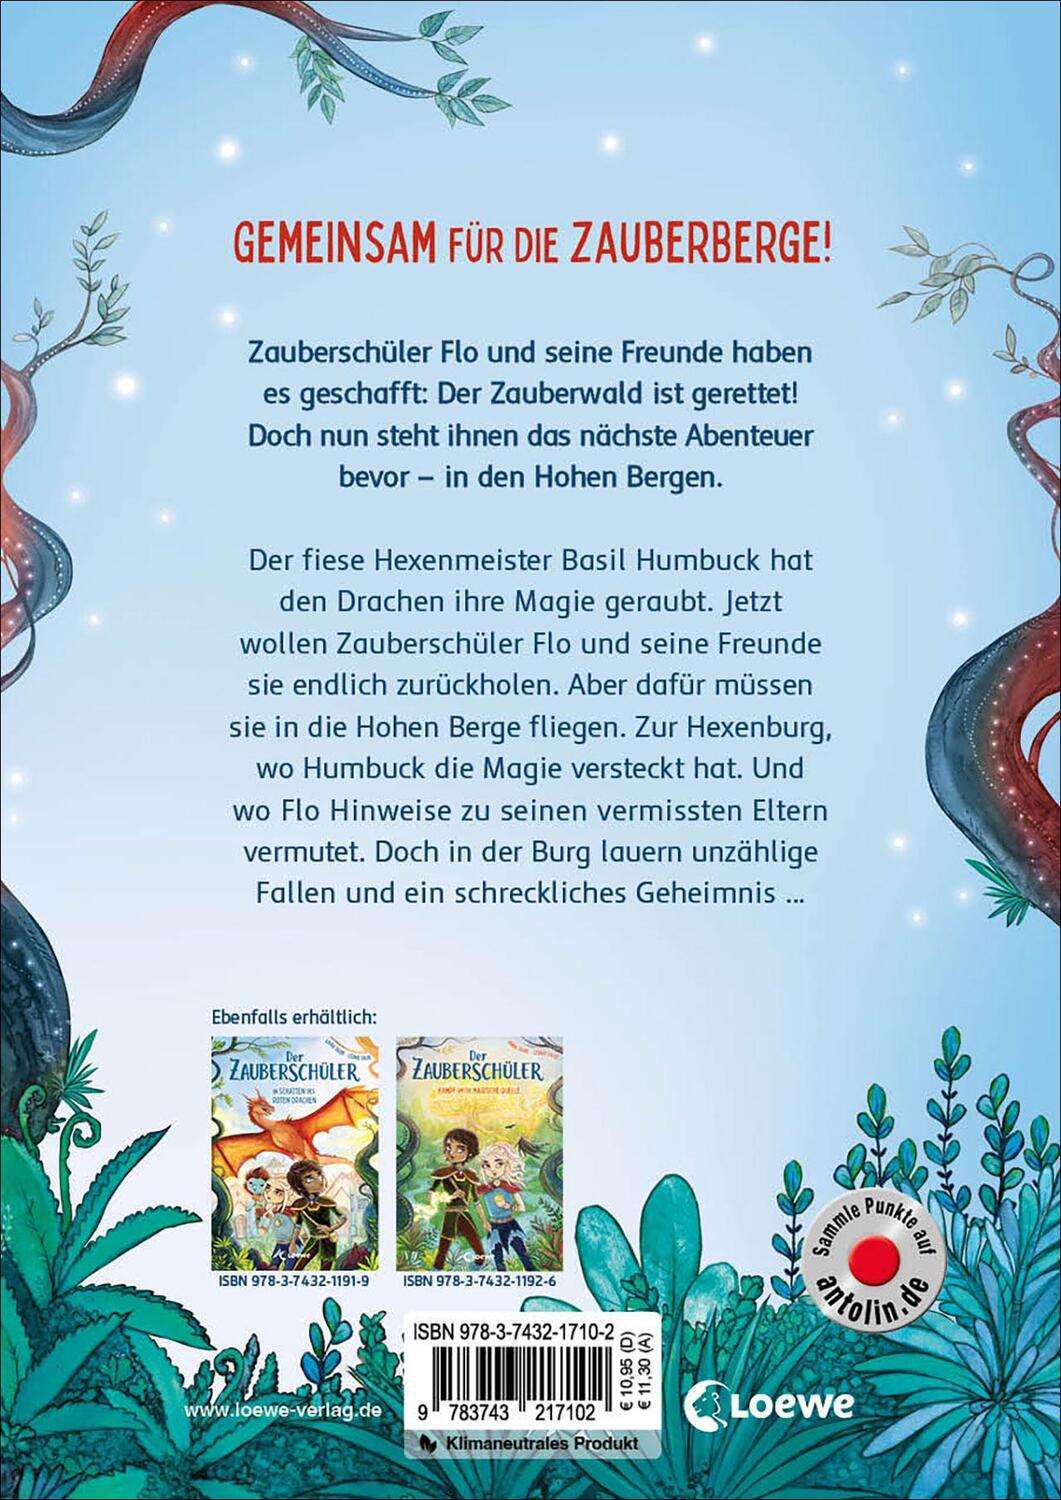 Rückseite: 9783743217102 | Der Zauberschüler (Band 5) - Im Kerker der Hexenburg | Anna Taube